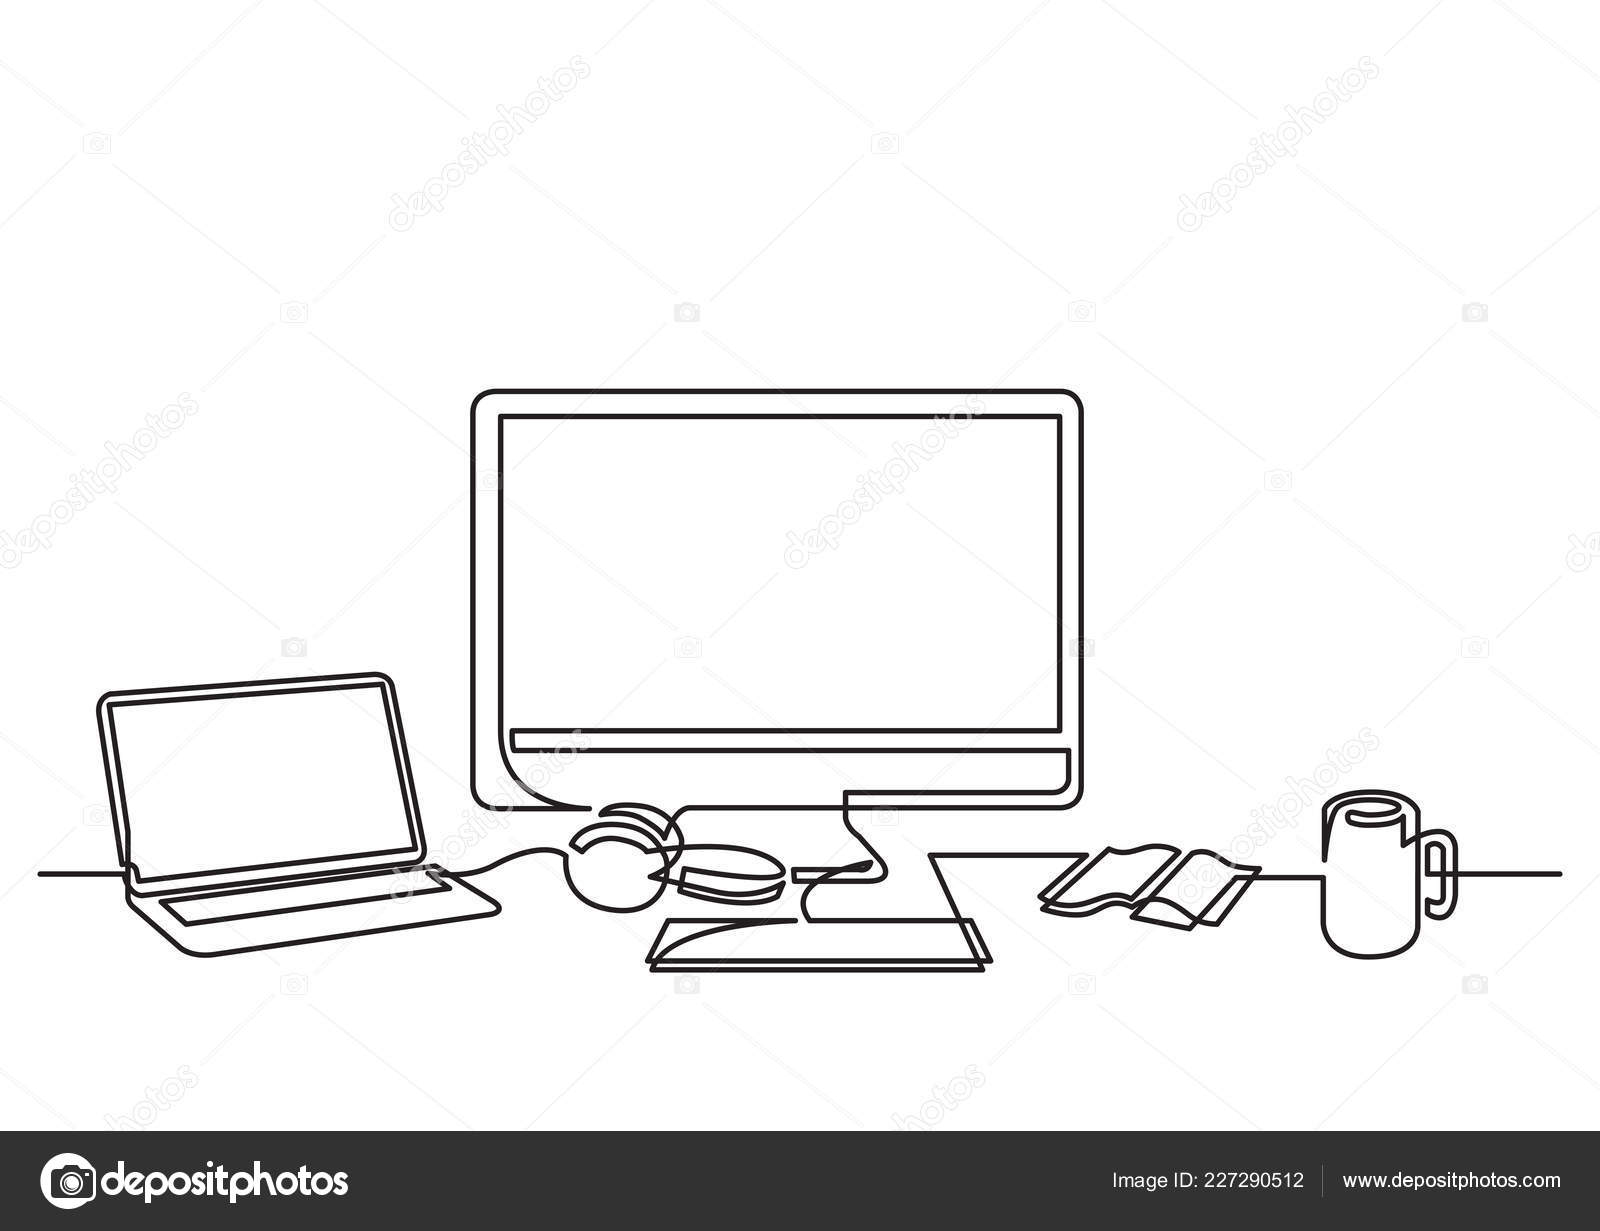 Drawings Drawing Of Mug Continuous Line Drawing Desktop